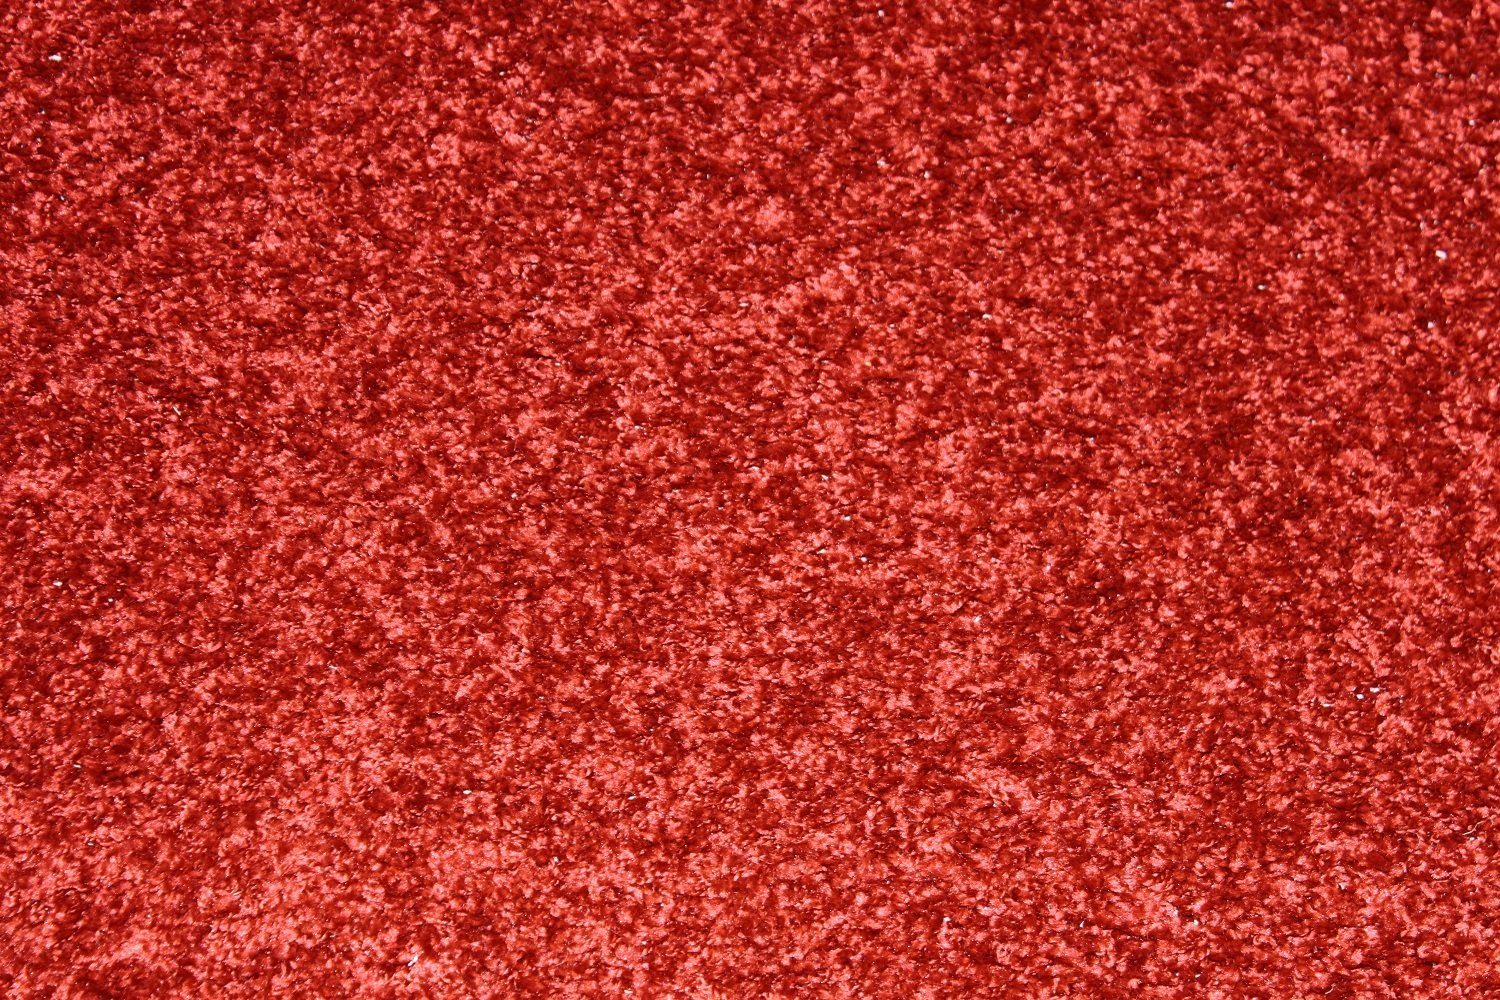 Florhöhe, Schlafzimmer Wohnzimmer Giantore, 30mm Langflor rechteck Dunkel-Rot Teppich Shaggy